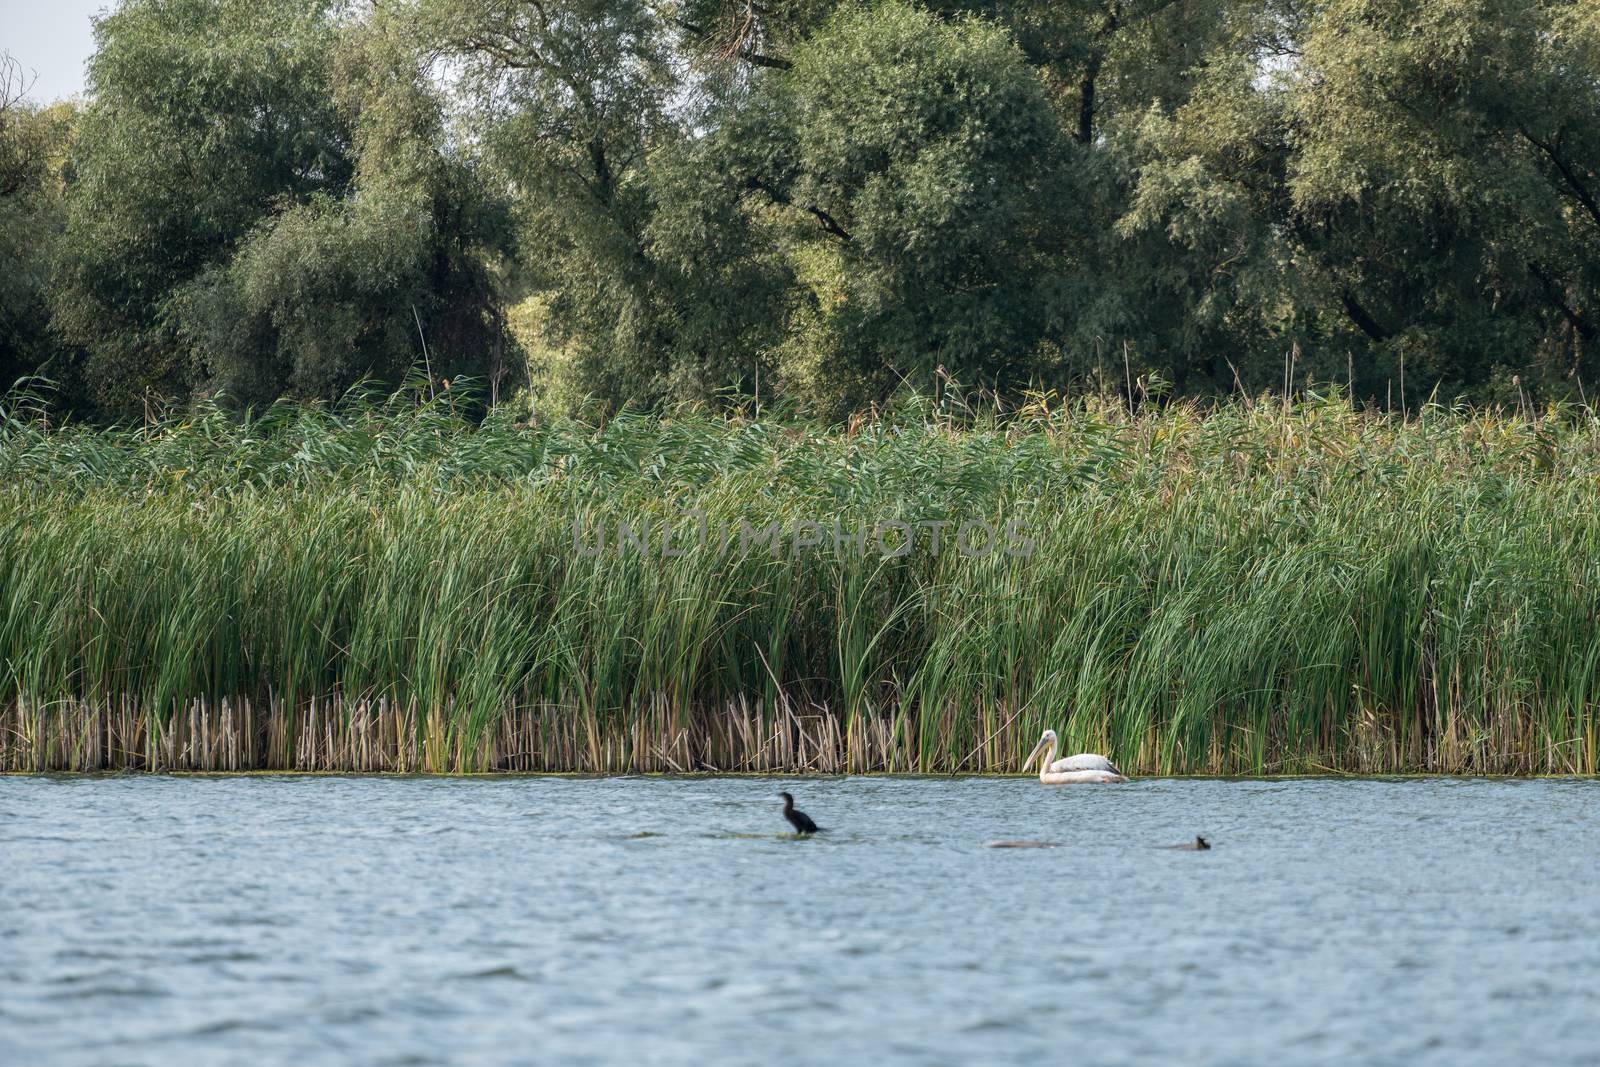 Great White Pelican (pelecanus onocrotalus) in the Danube Delta